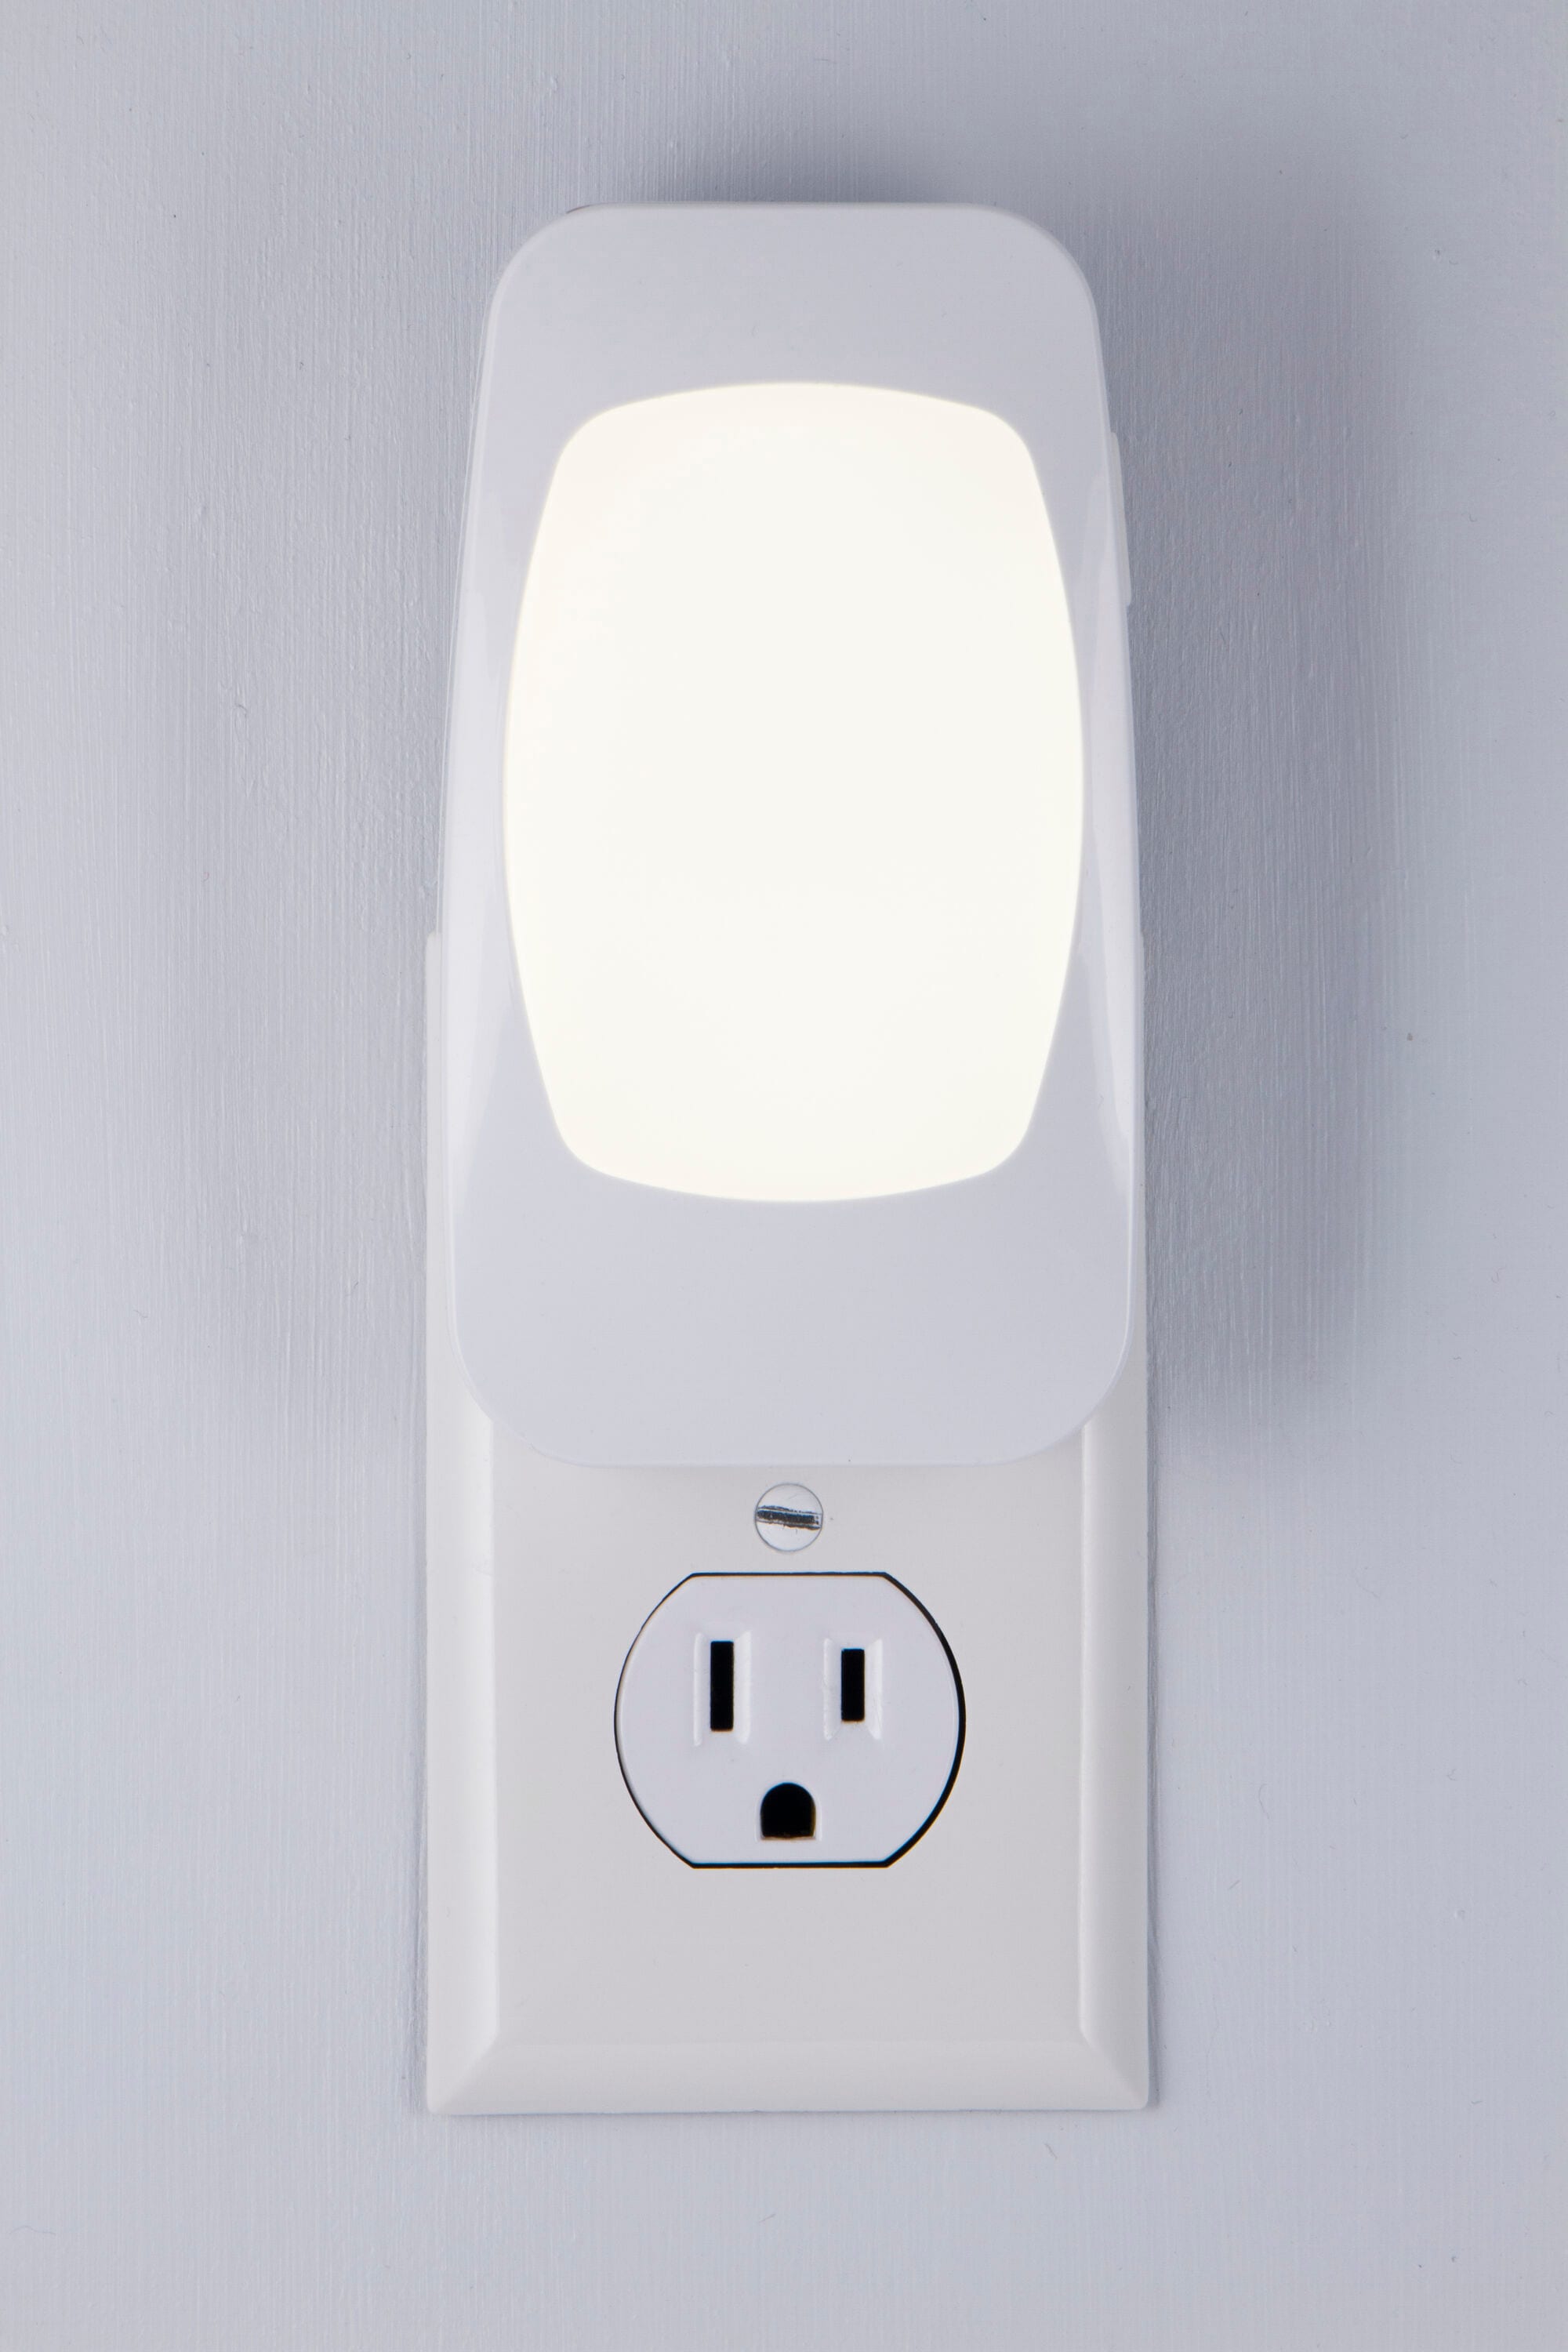 GE 4-in-1 Power Failure LED Night Light, White